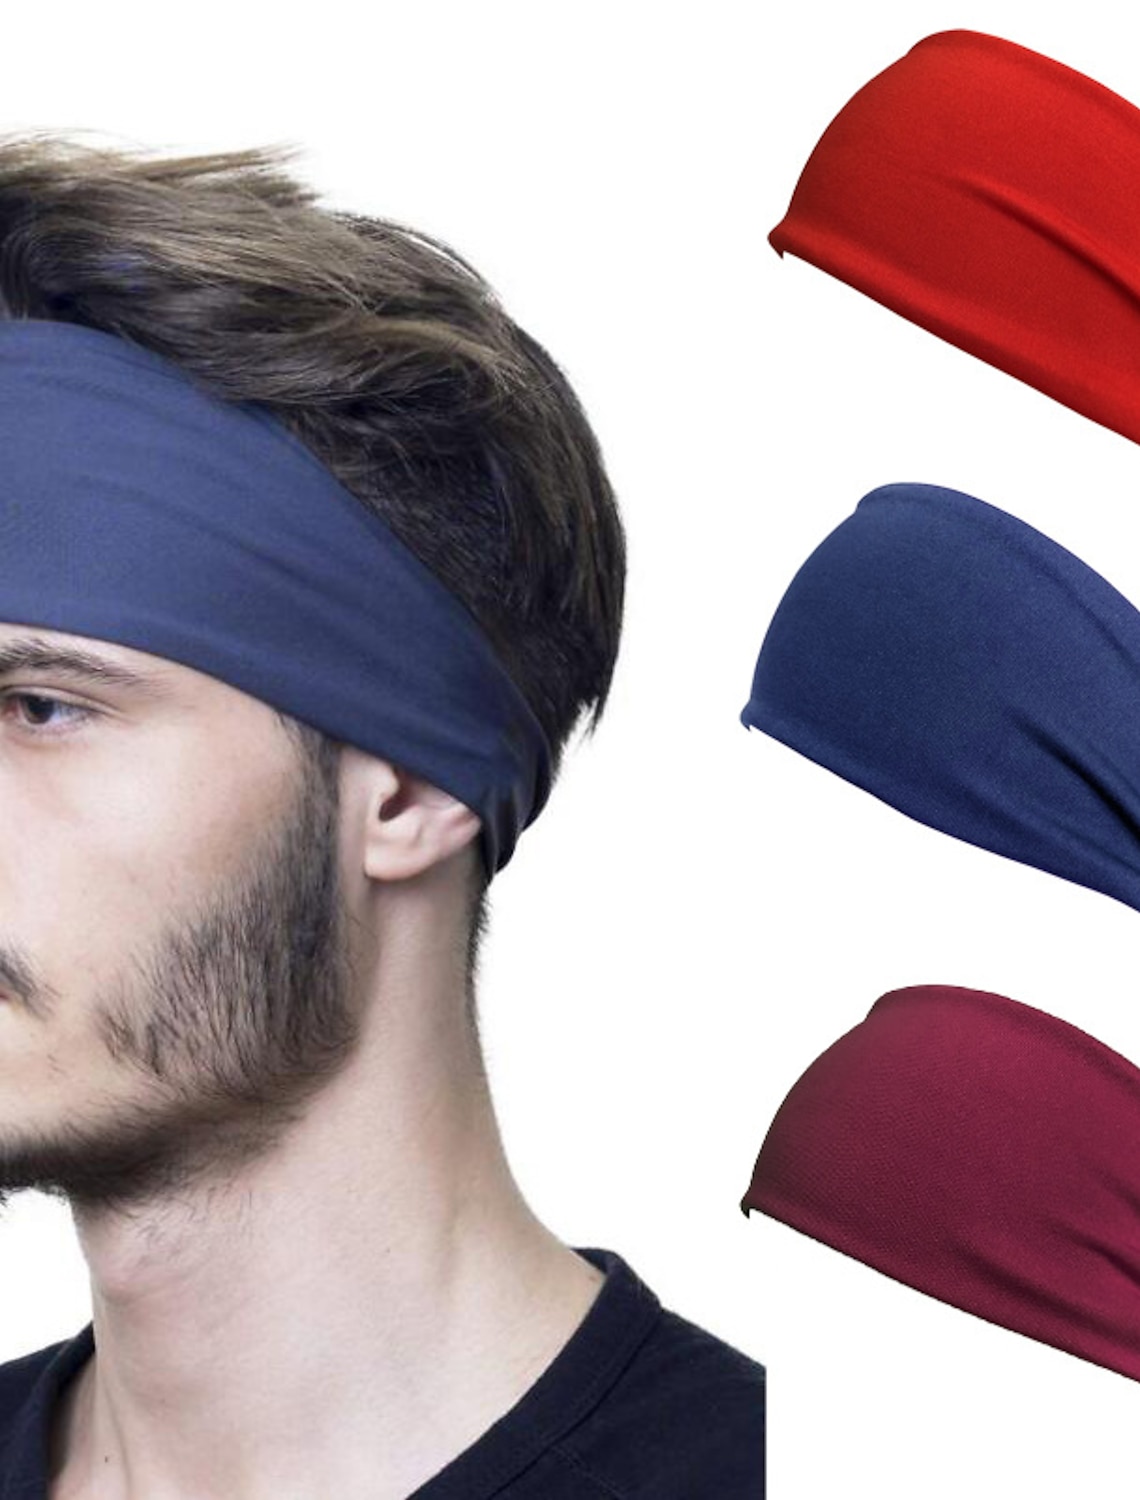 5pcs stripe cotton headband hair band sweatband running yoga tennis gym sports 